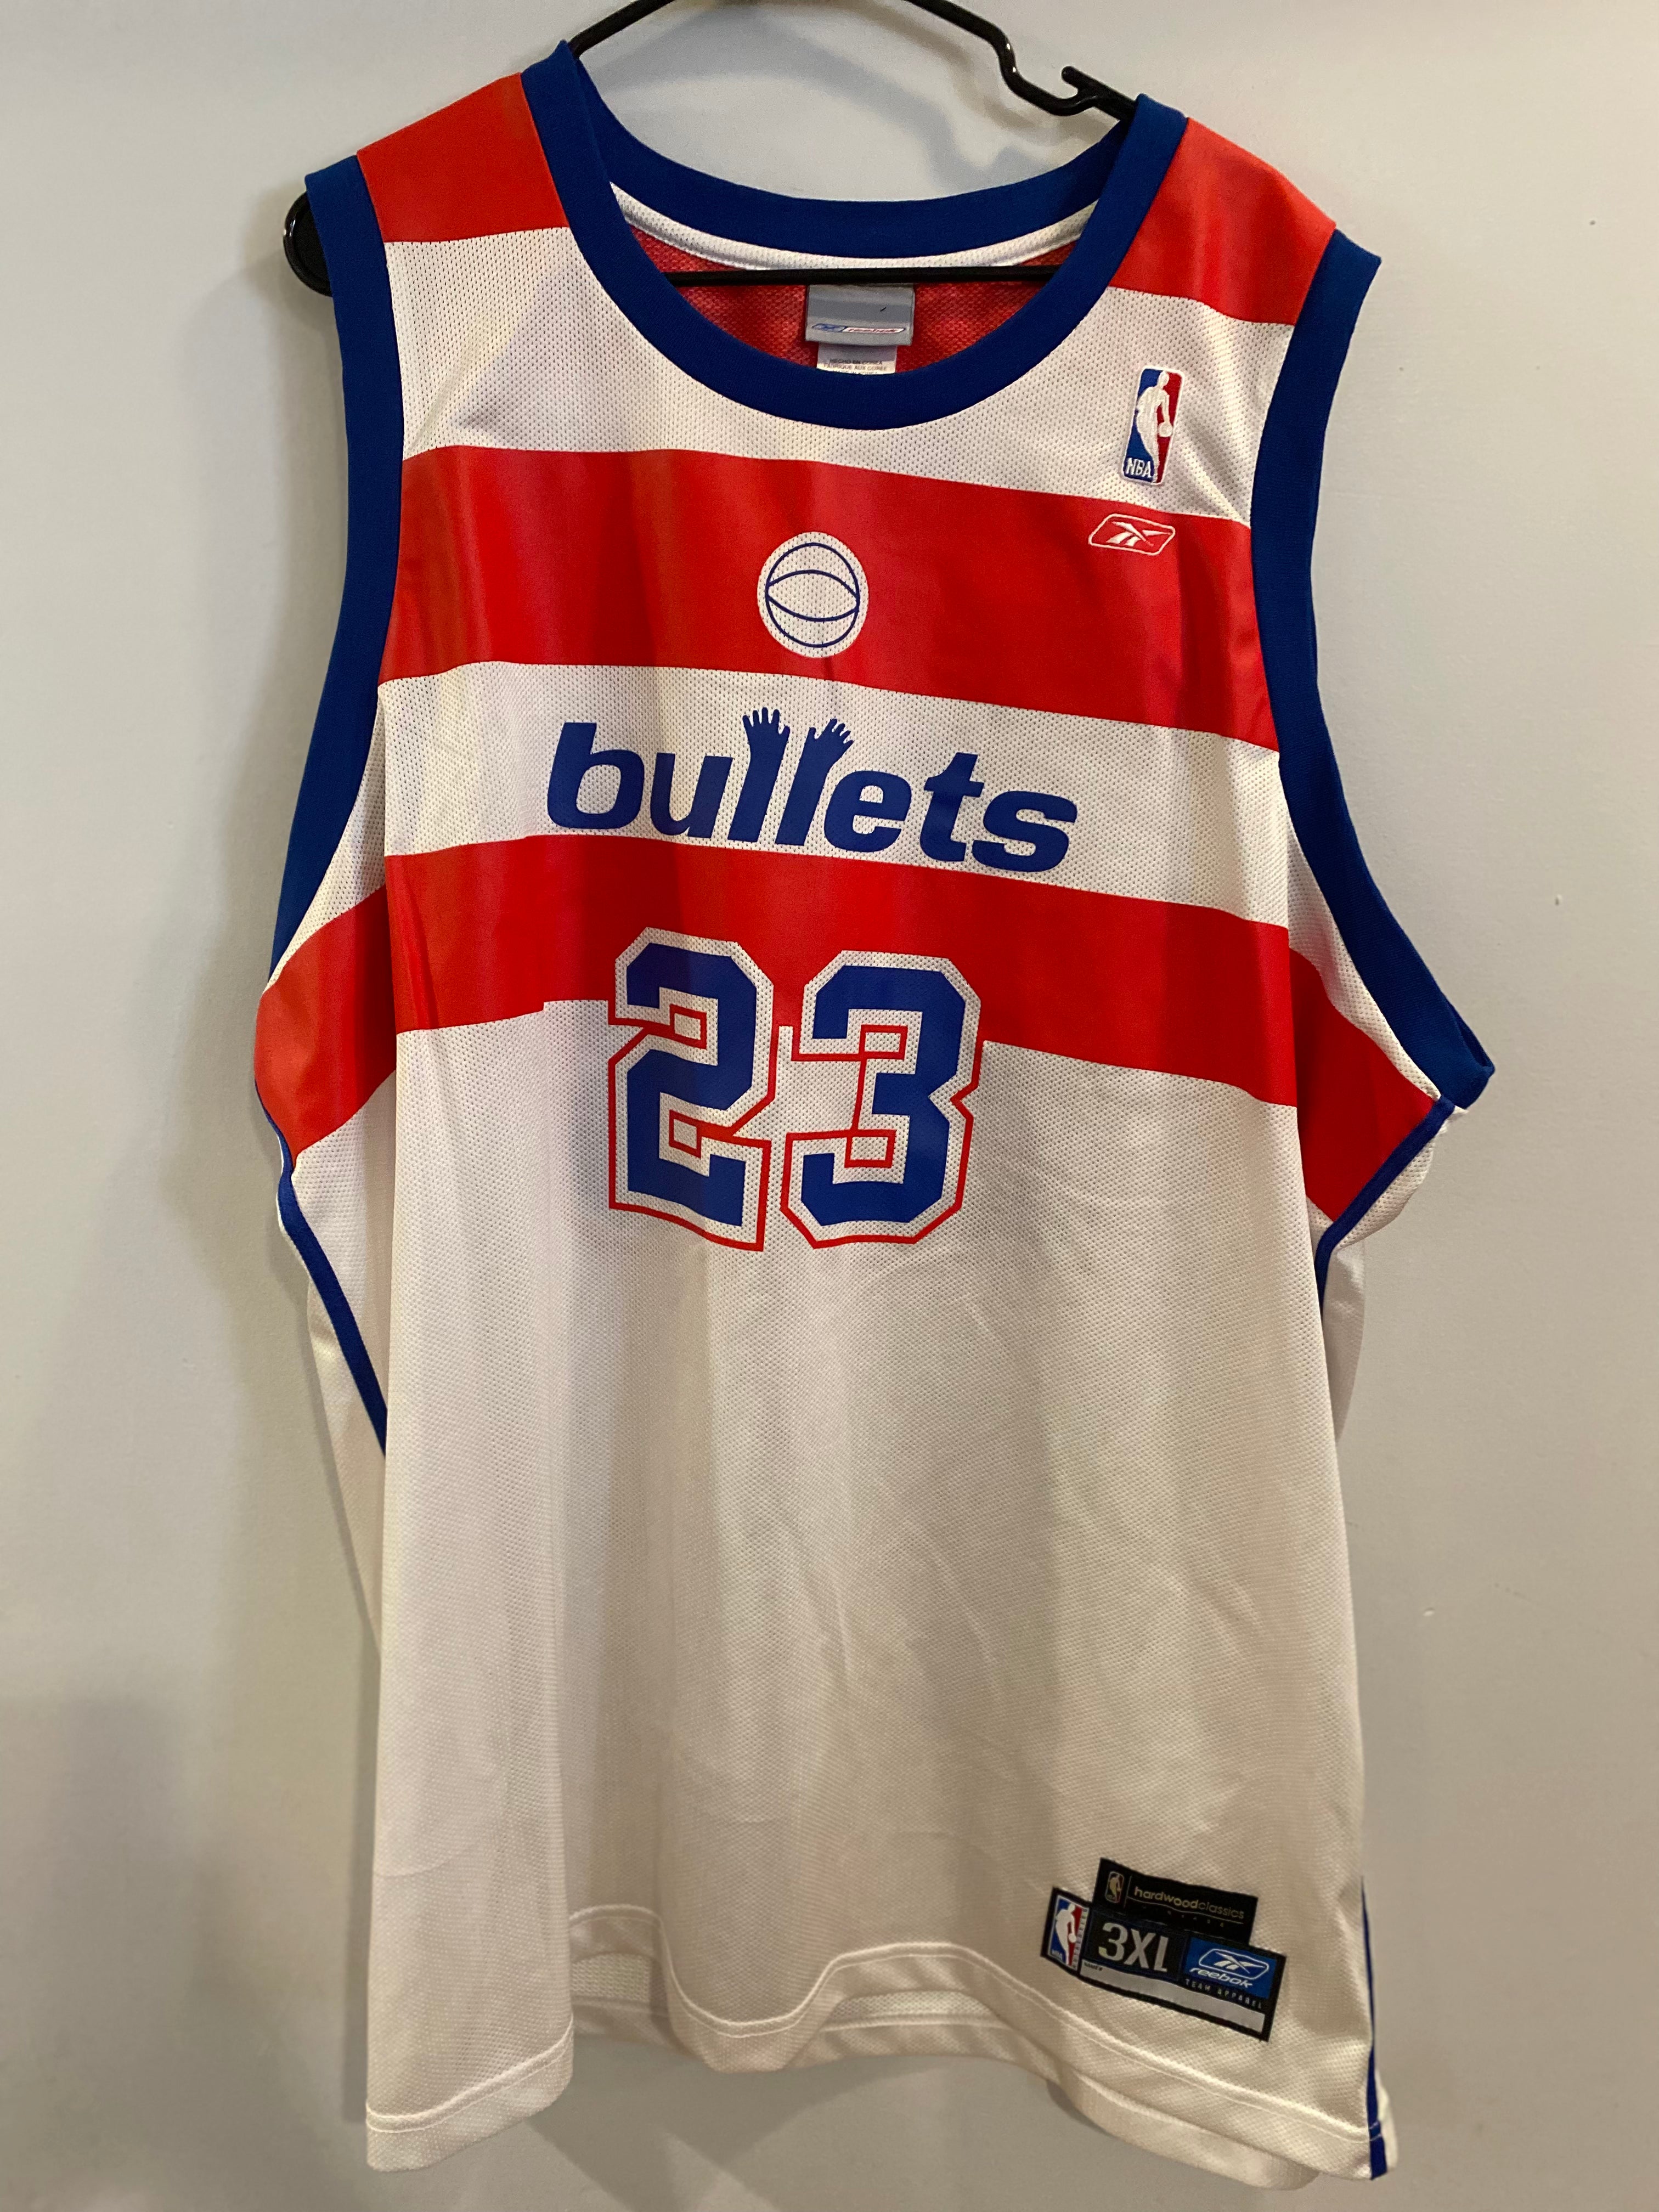 Nba Washington Bullets Basketball Jersey #23